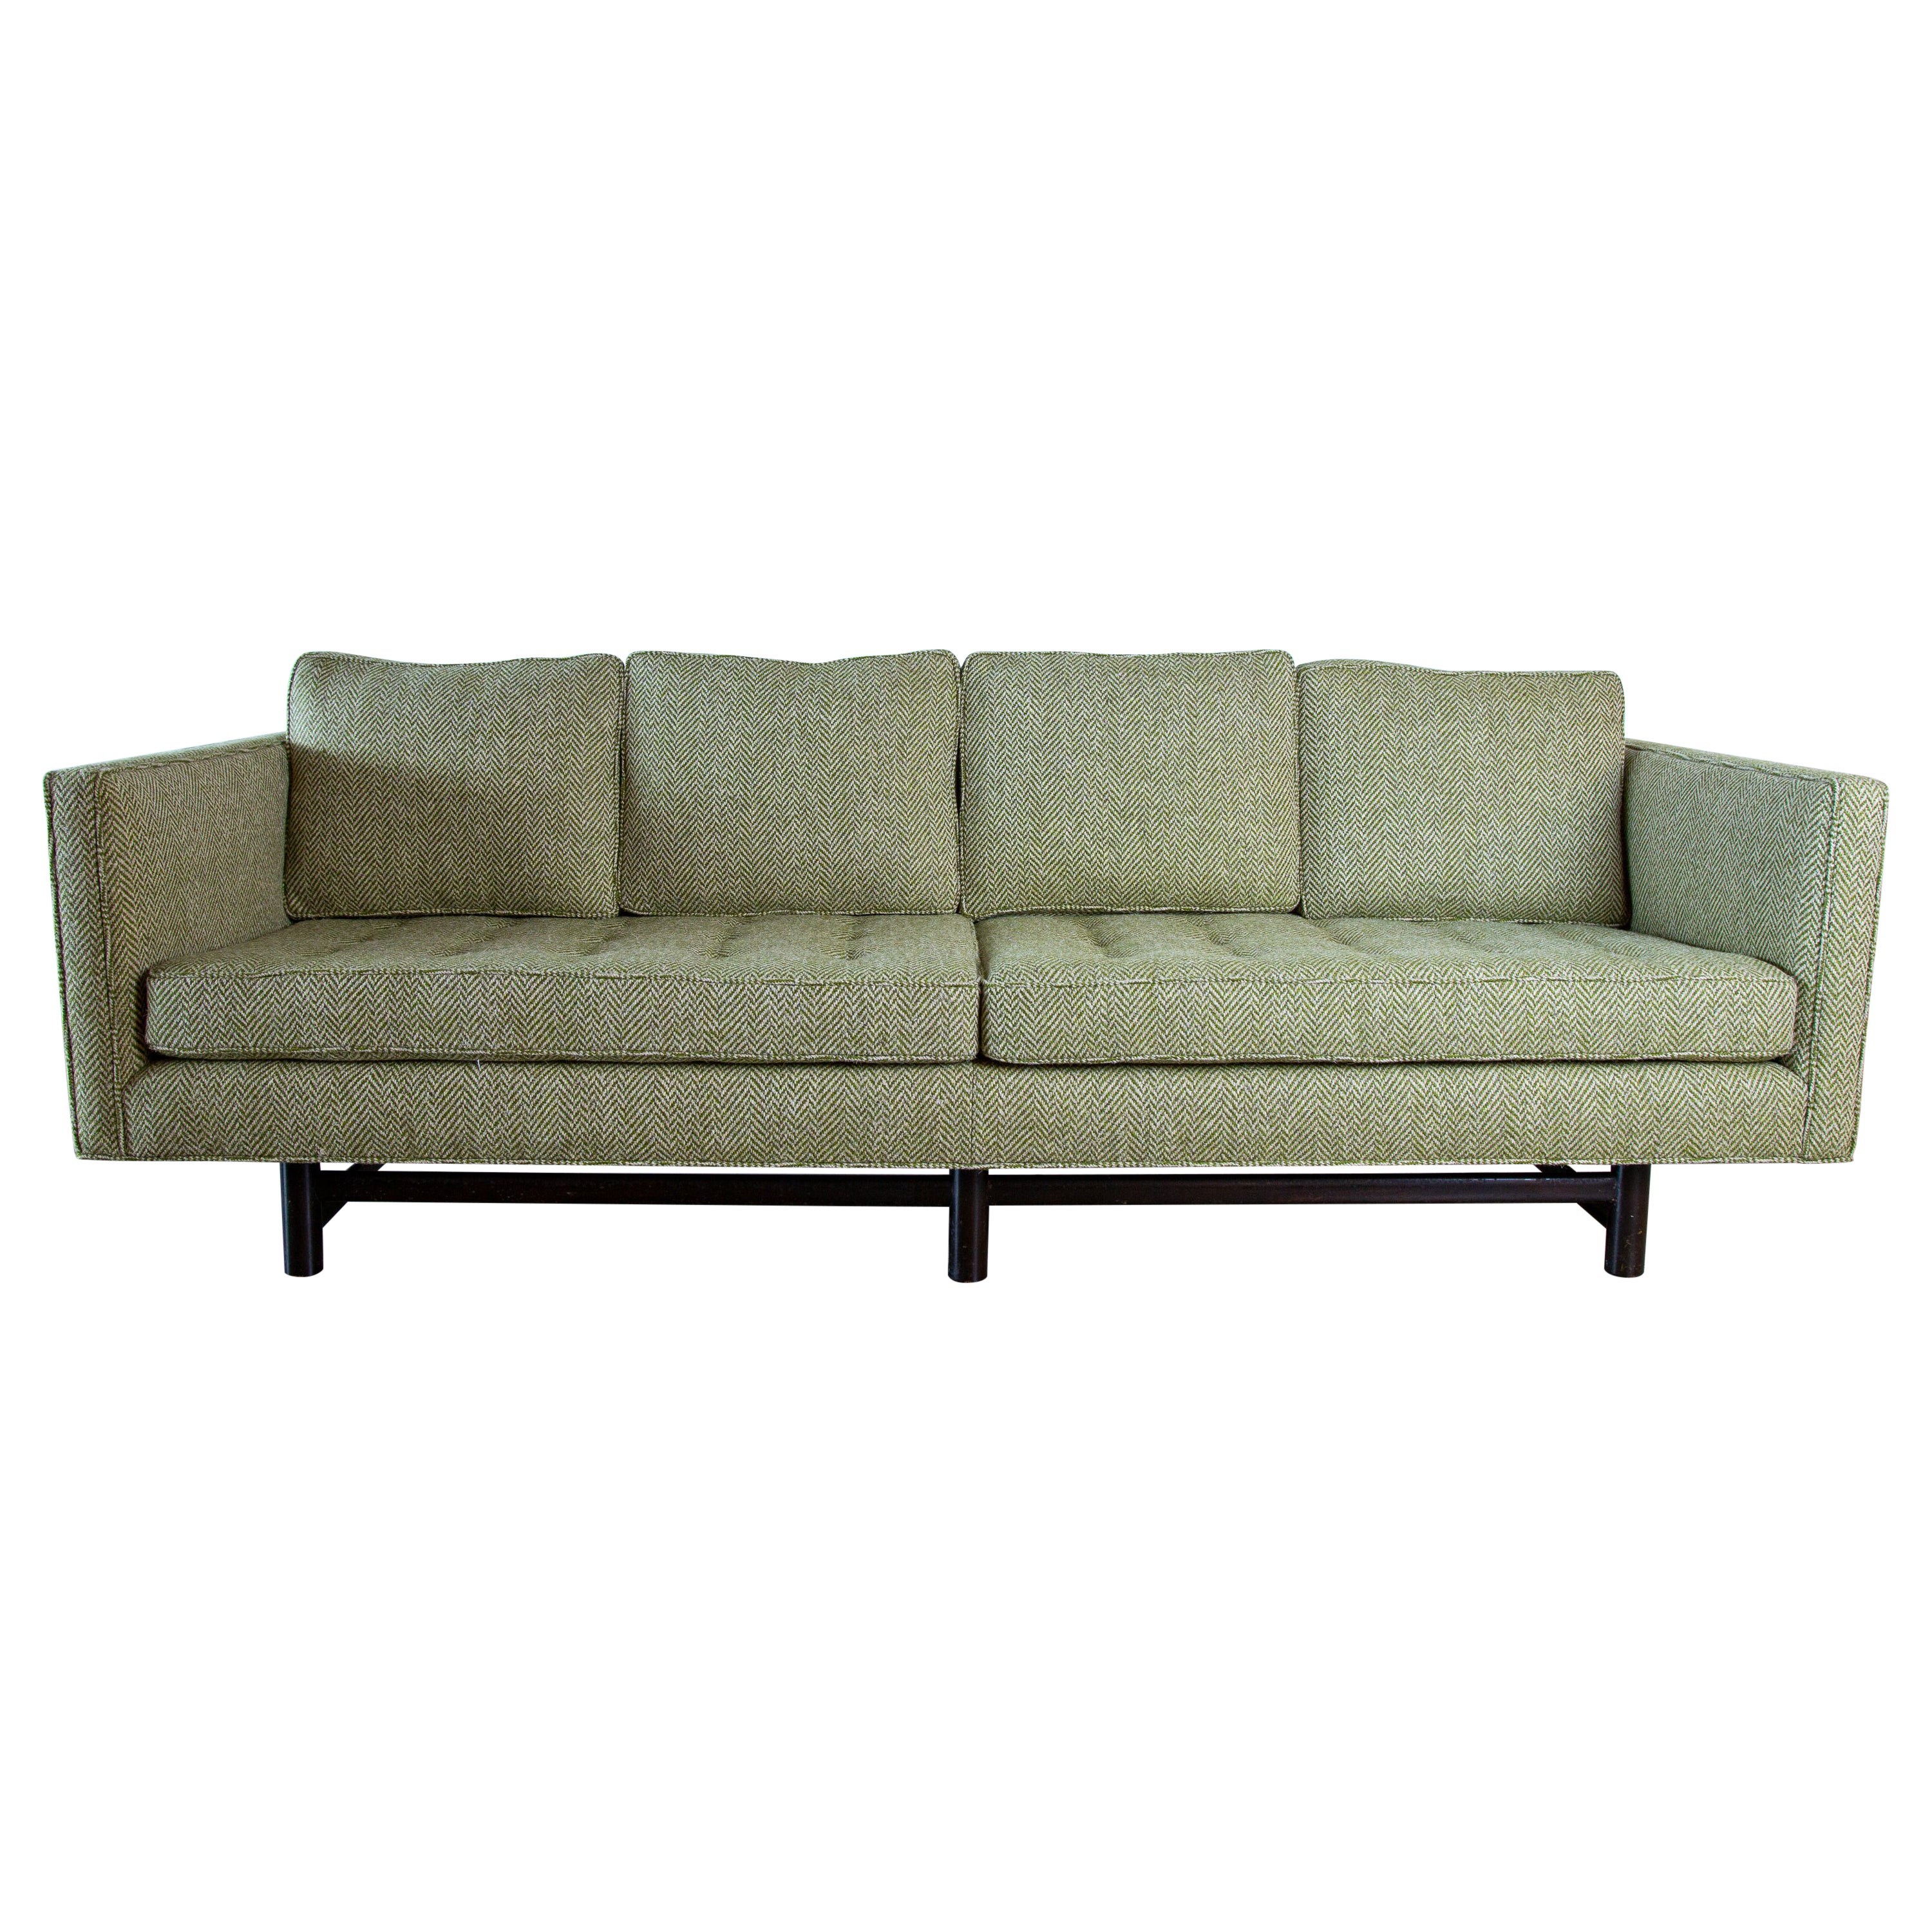 1950s Edward Wormley Dunbar Green Wool Sofa model 5138 Mahogany Base (2 avail) For Sale